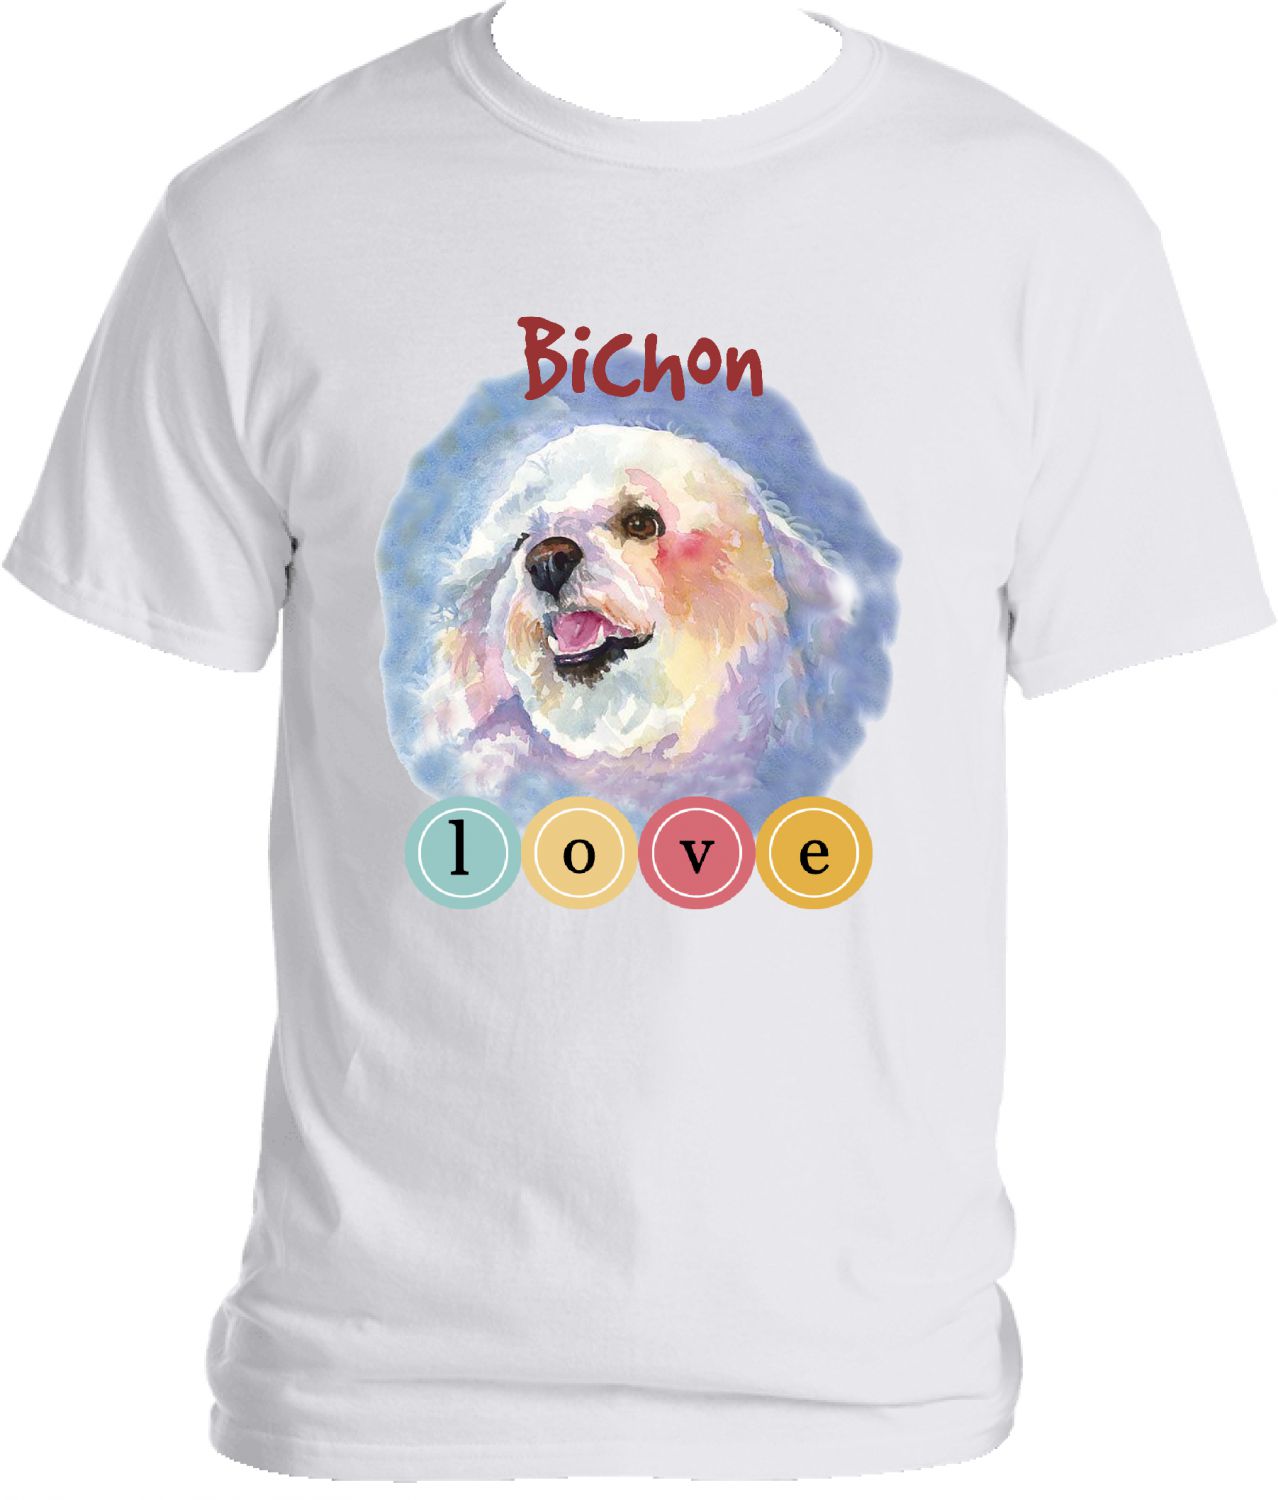 Bichon Love Tee Shirt